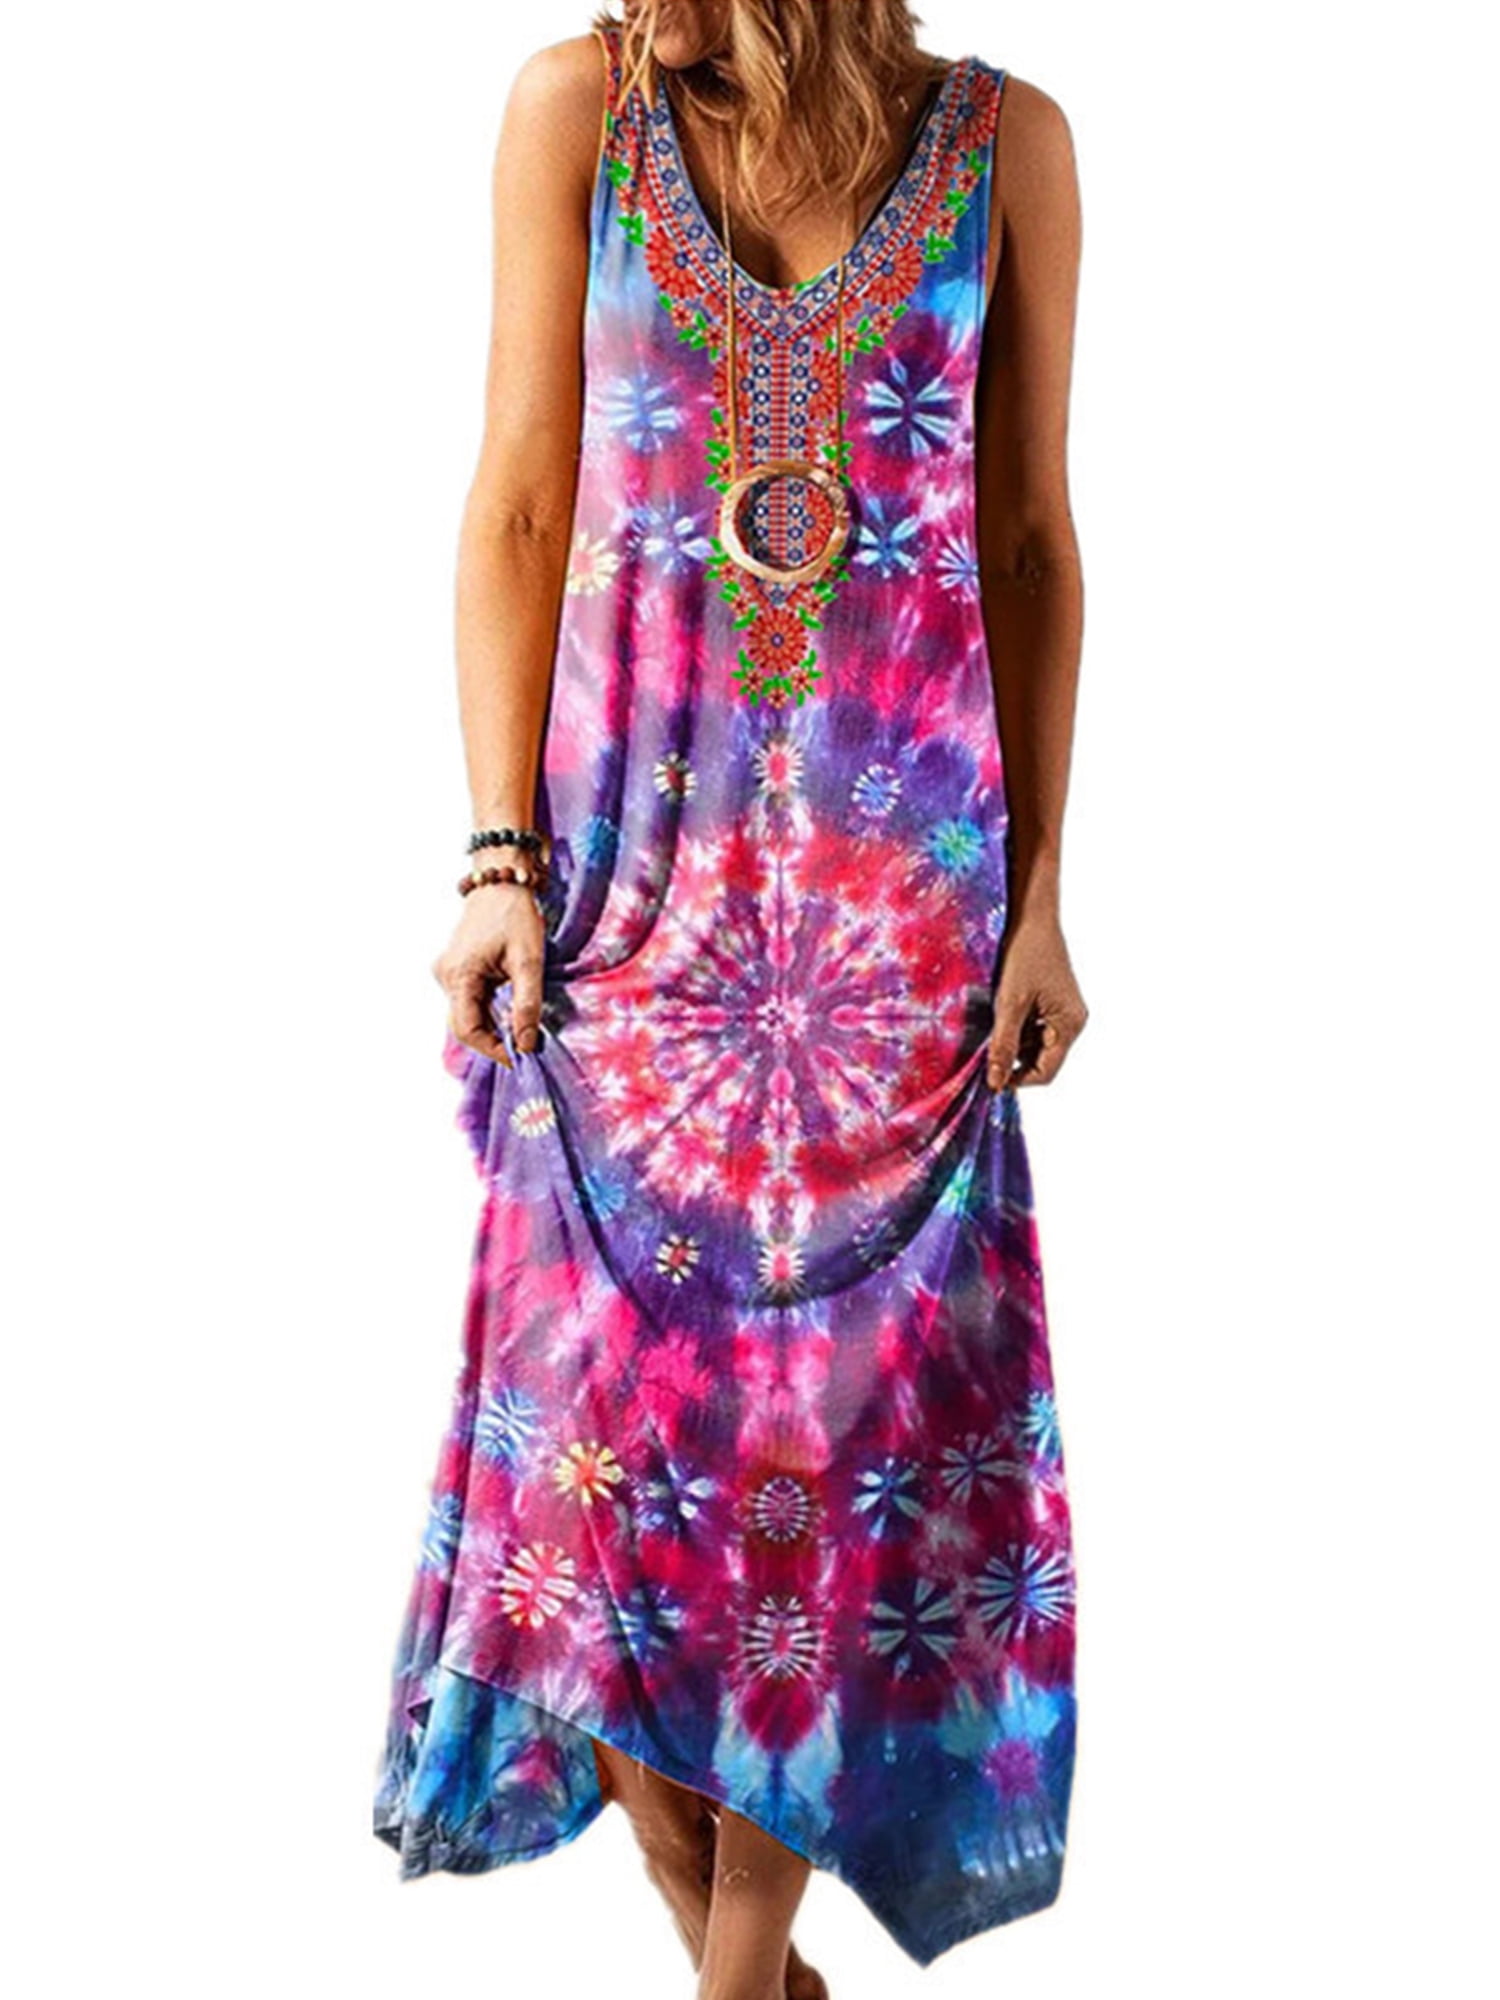 Tshirt Dress with Pockets for Women Tie Dye Print Summer Floral Mini Dress V-Neck Drawstring Sundresses 